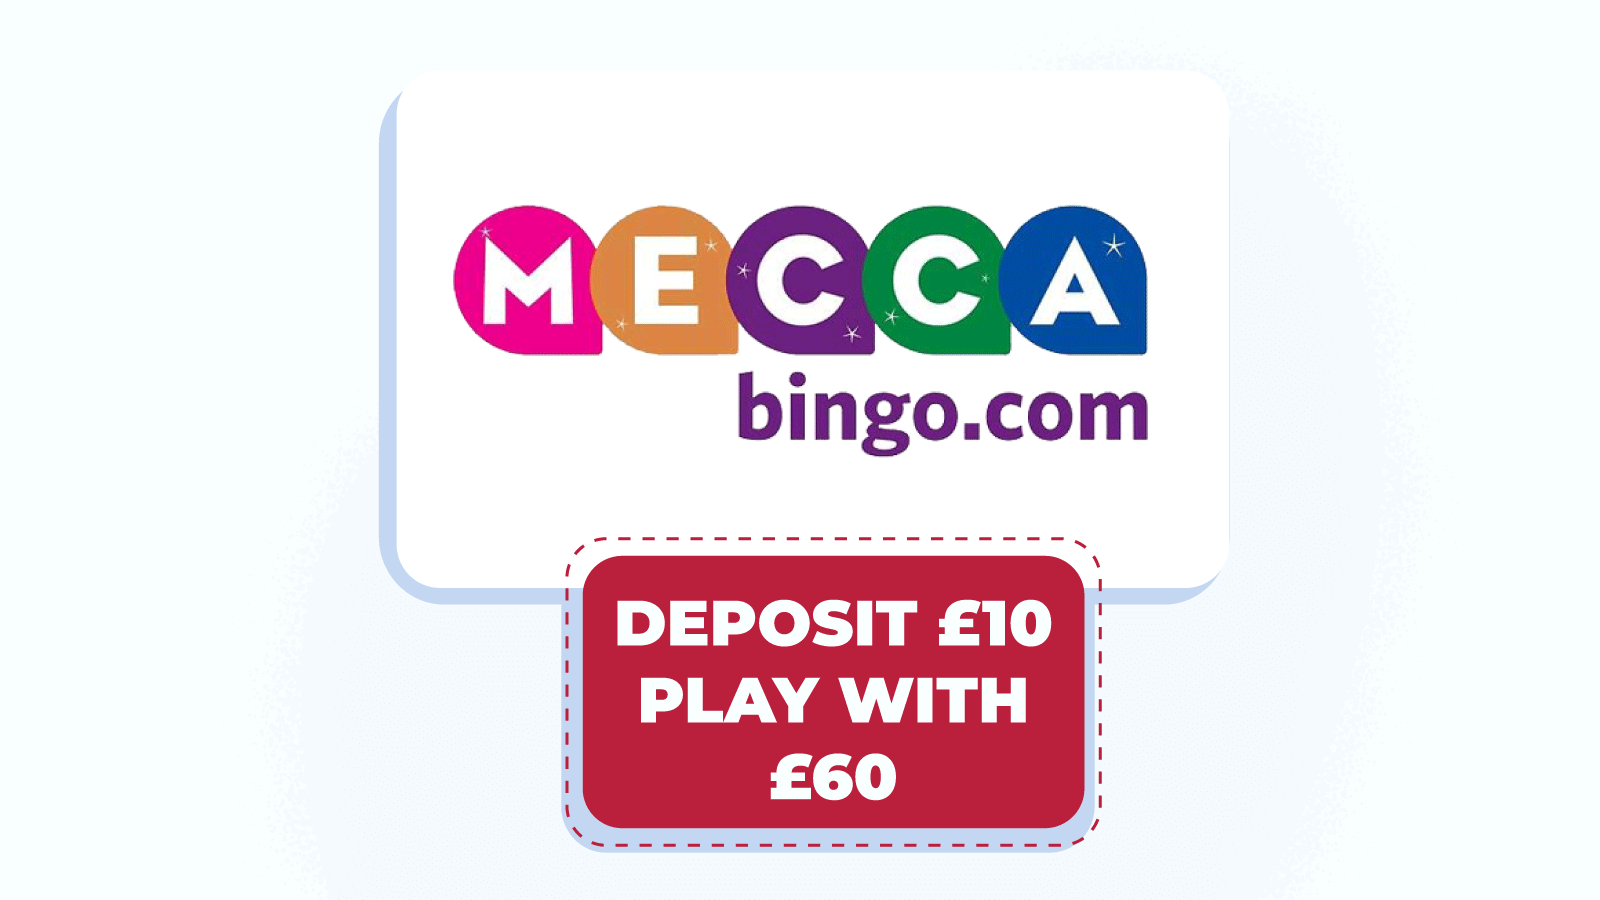 Deposit ¥10, play with ¥60 at Mecca Bingo (600% bonus)